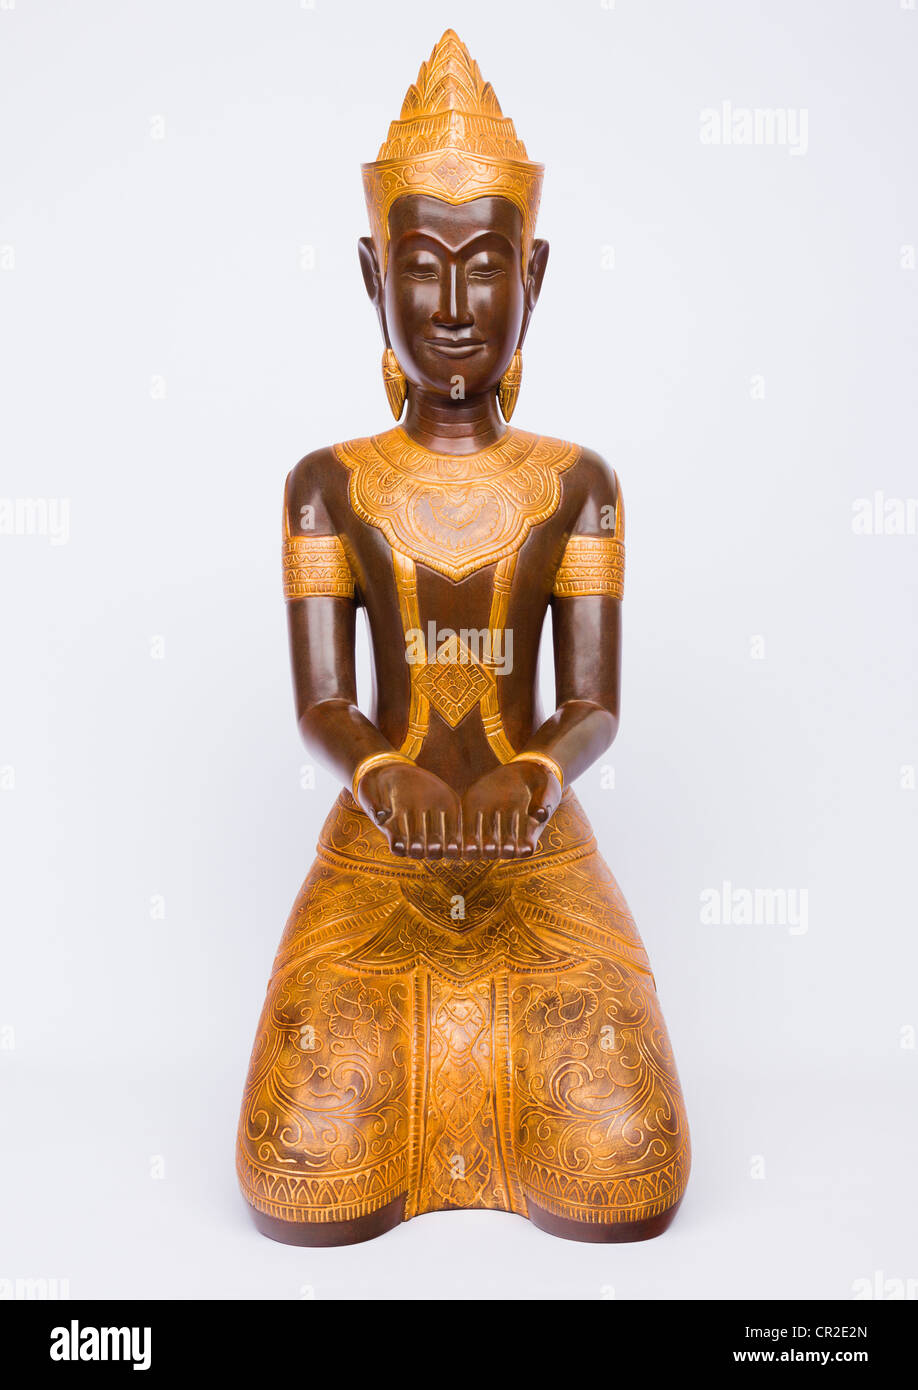 Estatua policromada de rodillas adorador Khmer contra un fondo blanco - la provincia de Siem Reap, Camboya Foto de stock